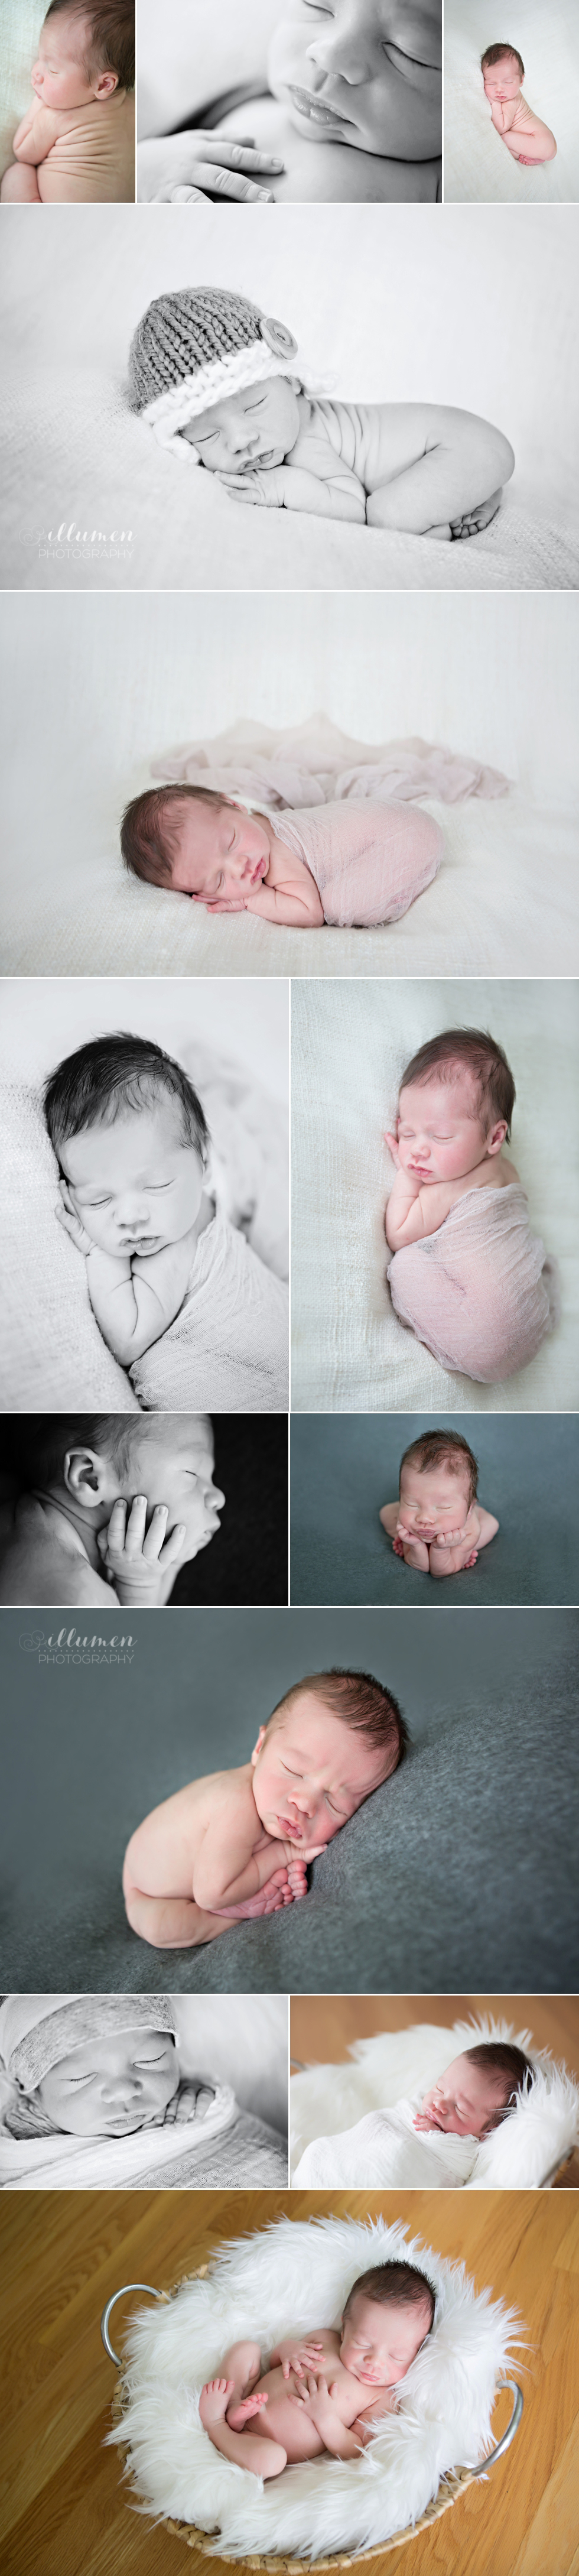 St. Louis Newborn Photography; Twin Newborns; Crestwood, Missouri, Illumen Photography; www.illumenphotography.com, affordable, baby, in studio